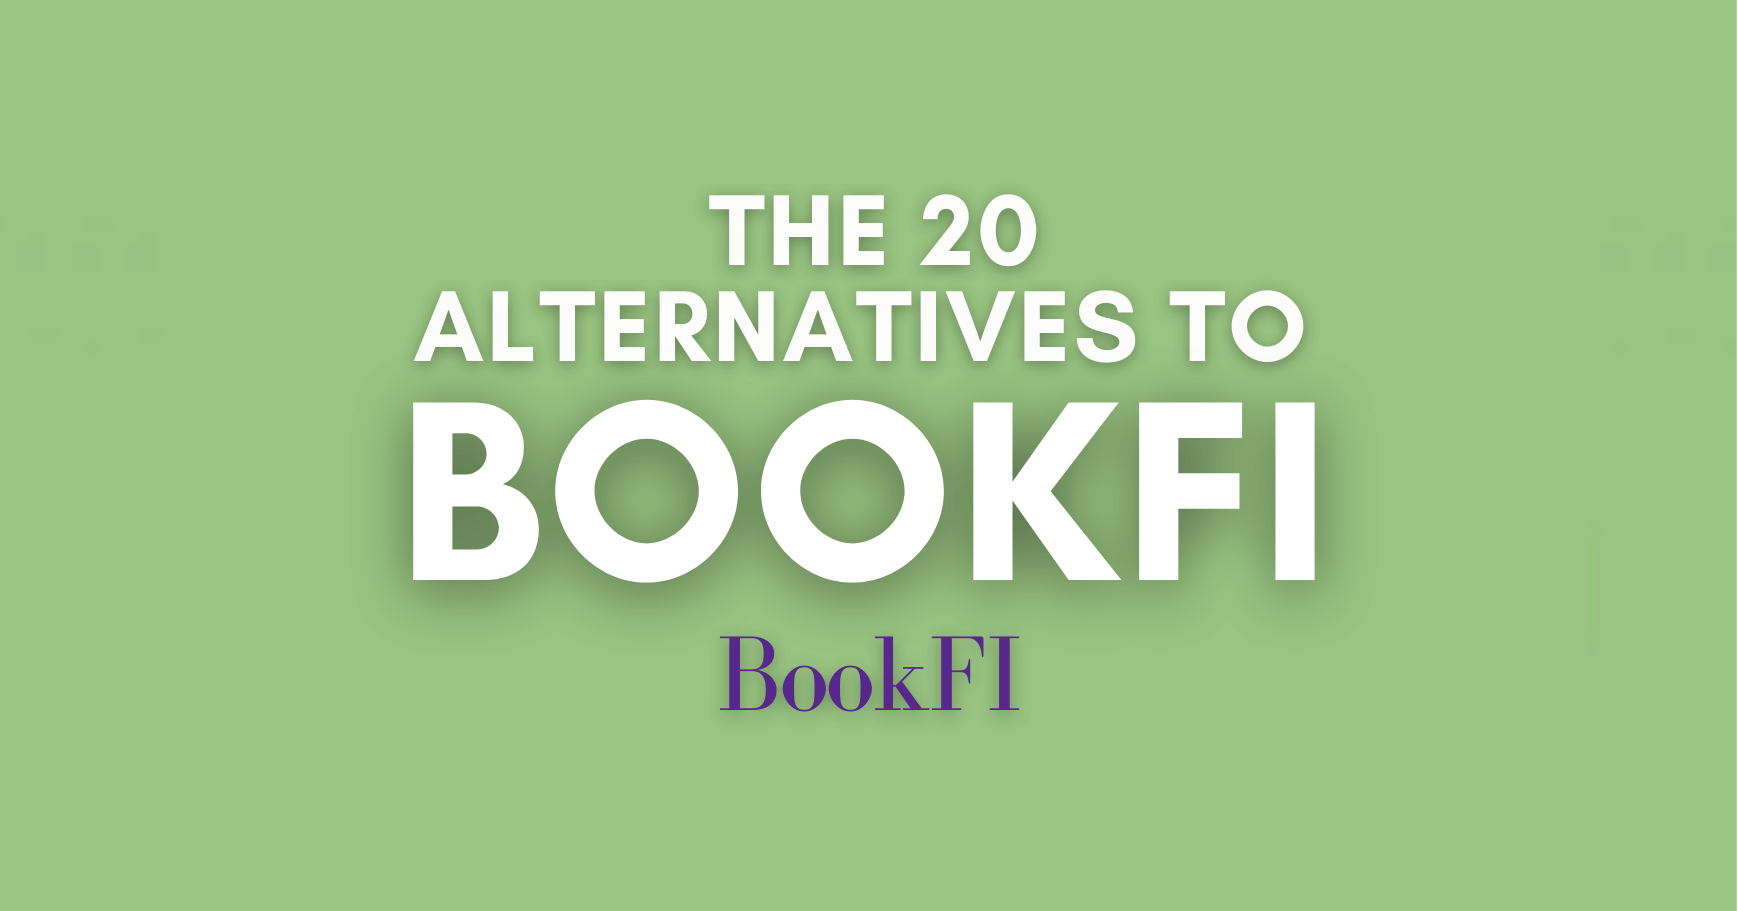 BookFI Alternatives